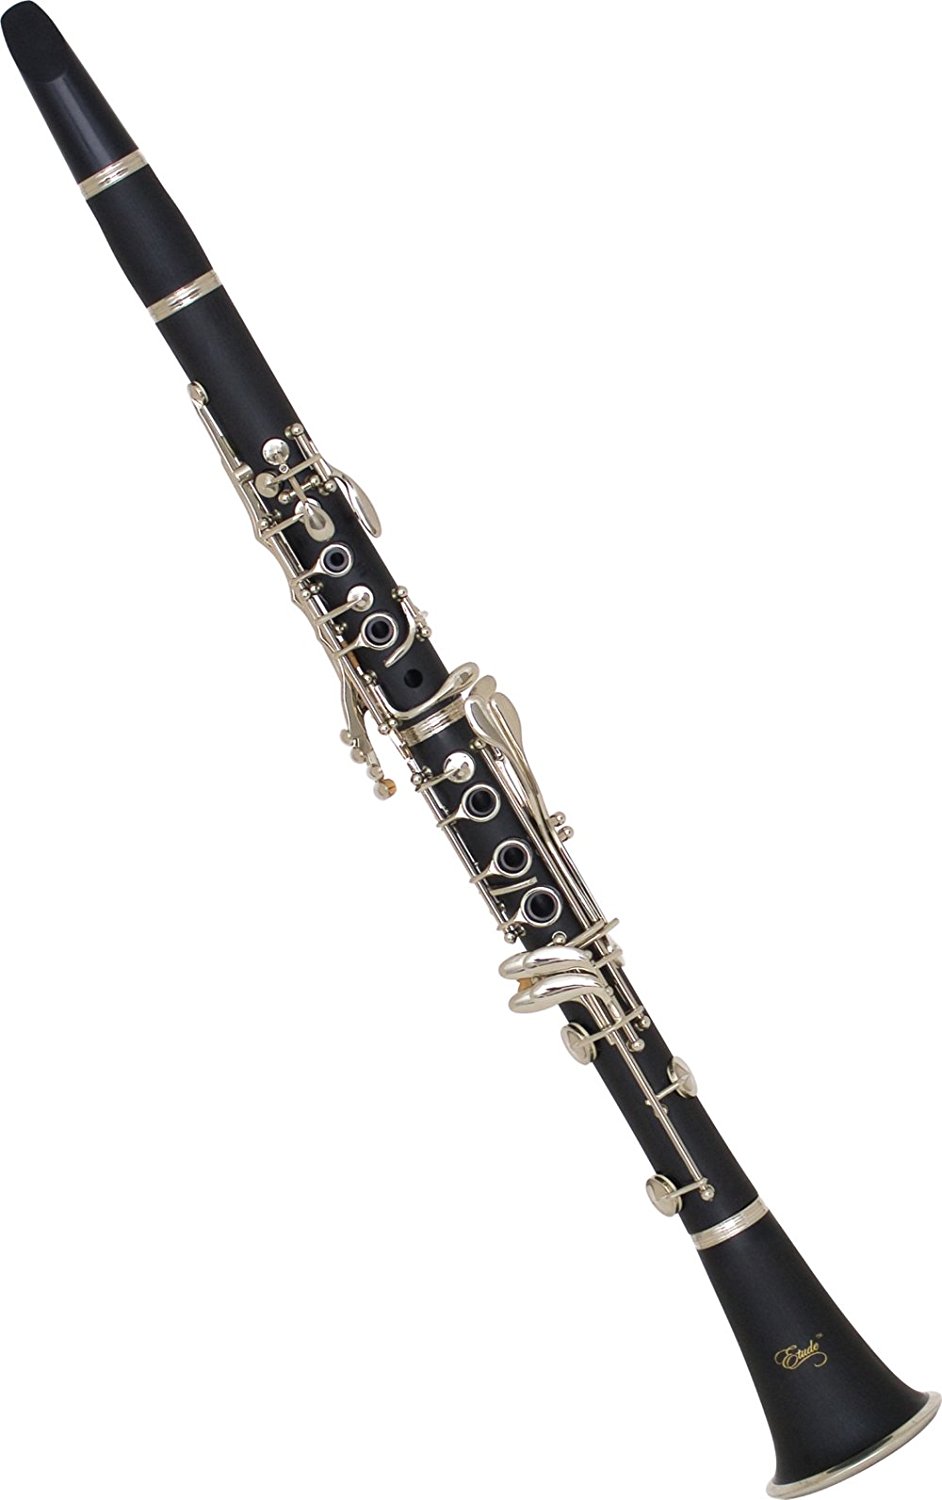 clarinet soundfont